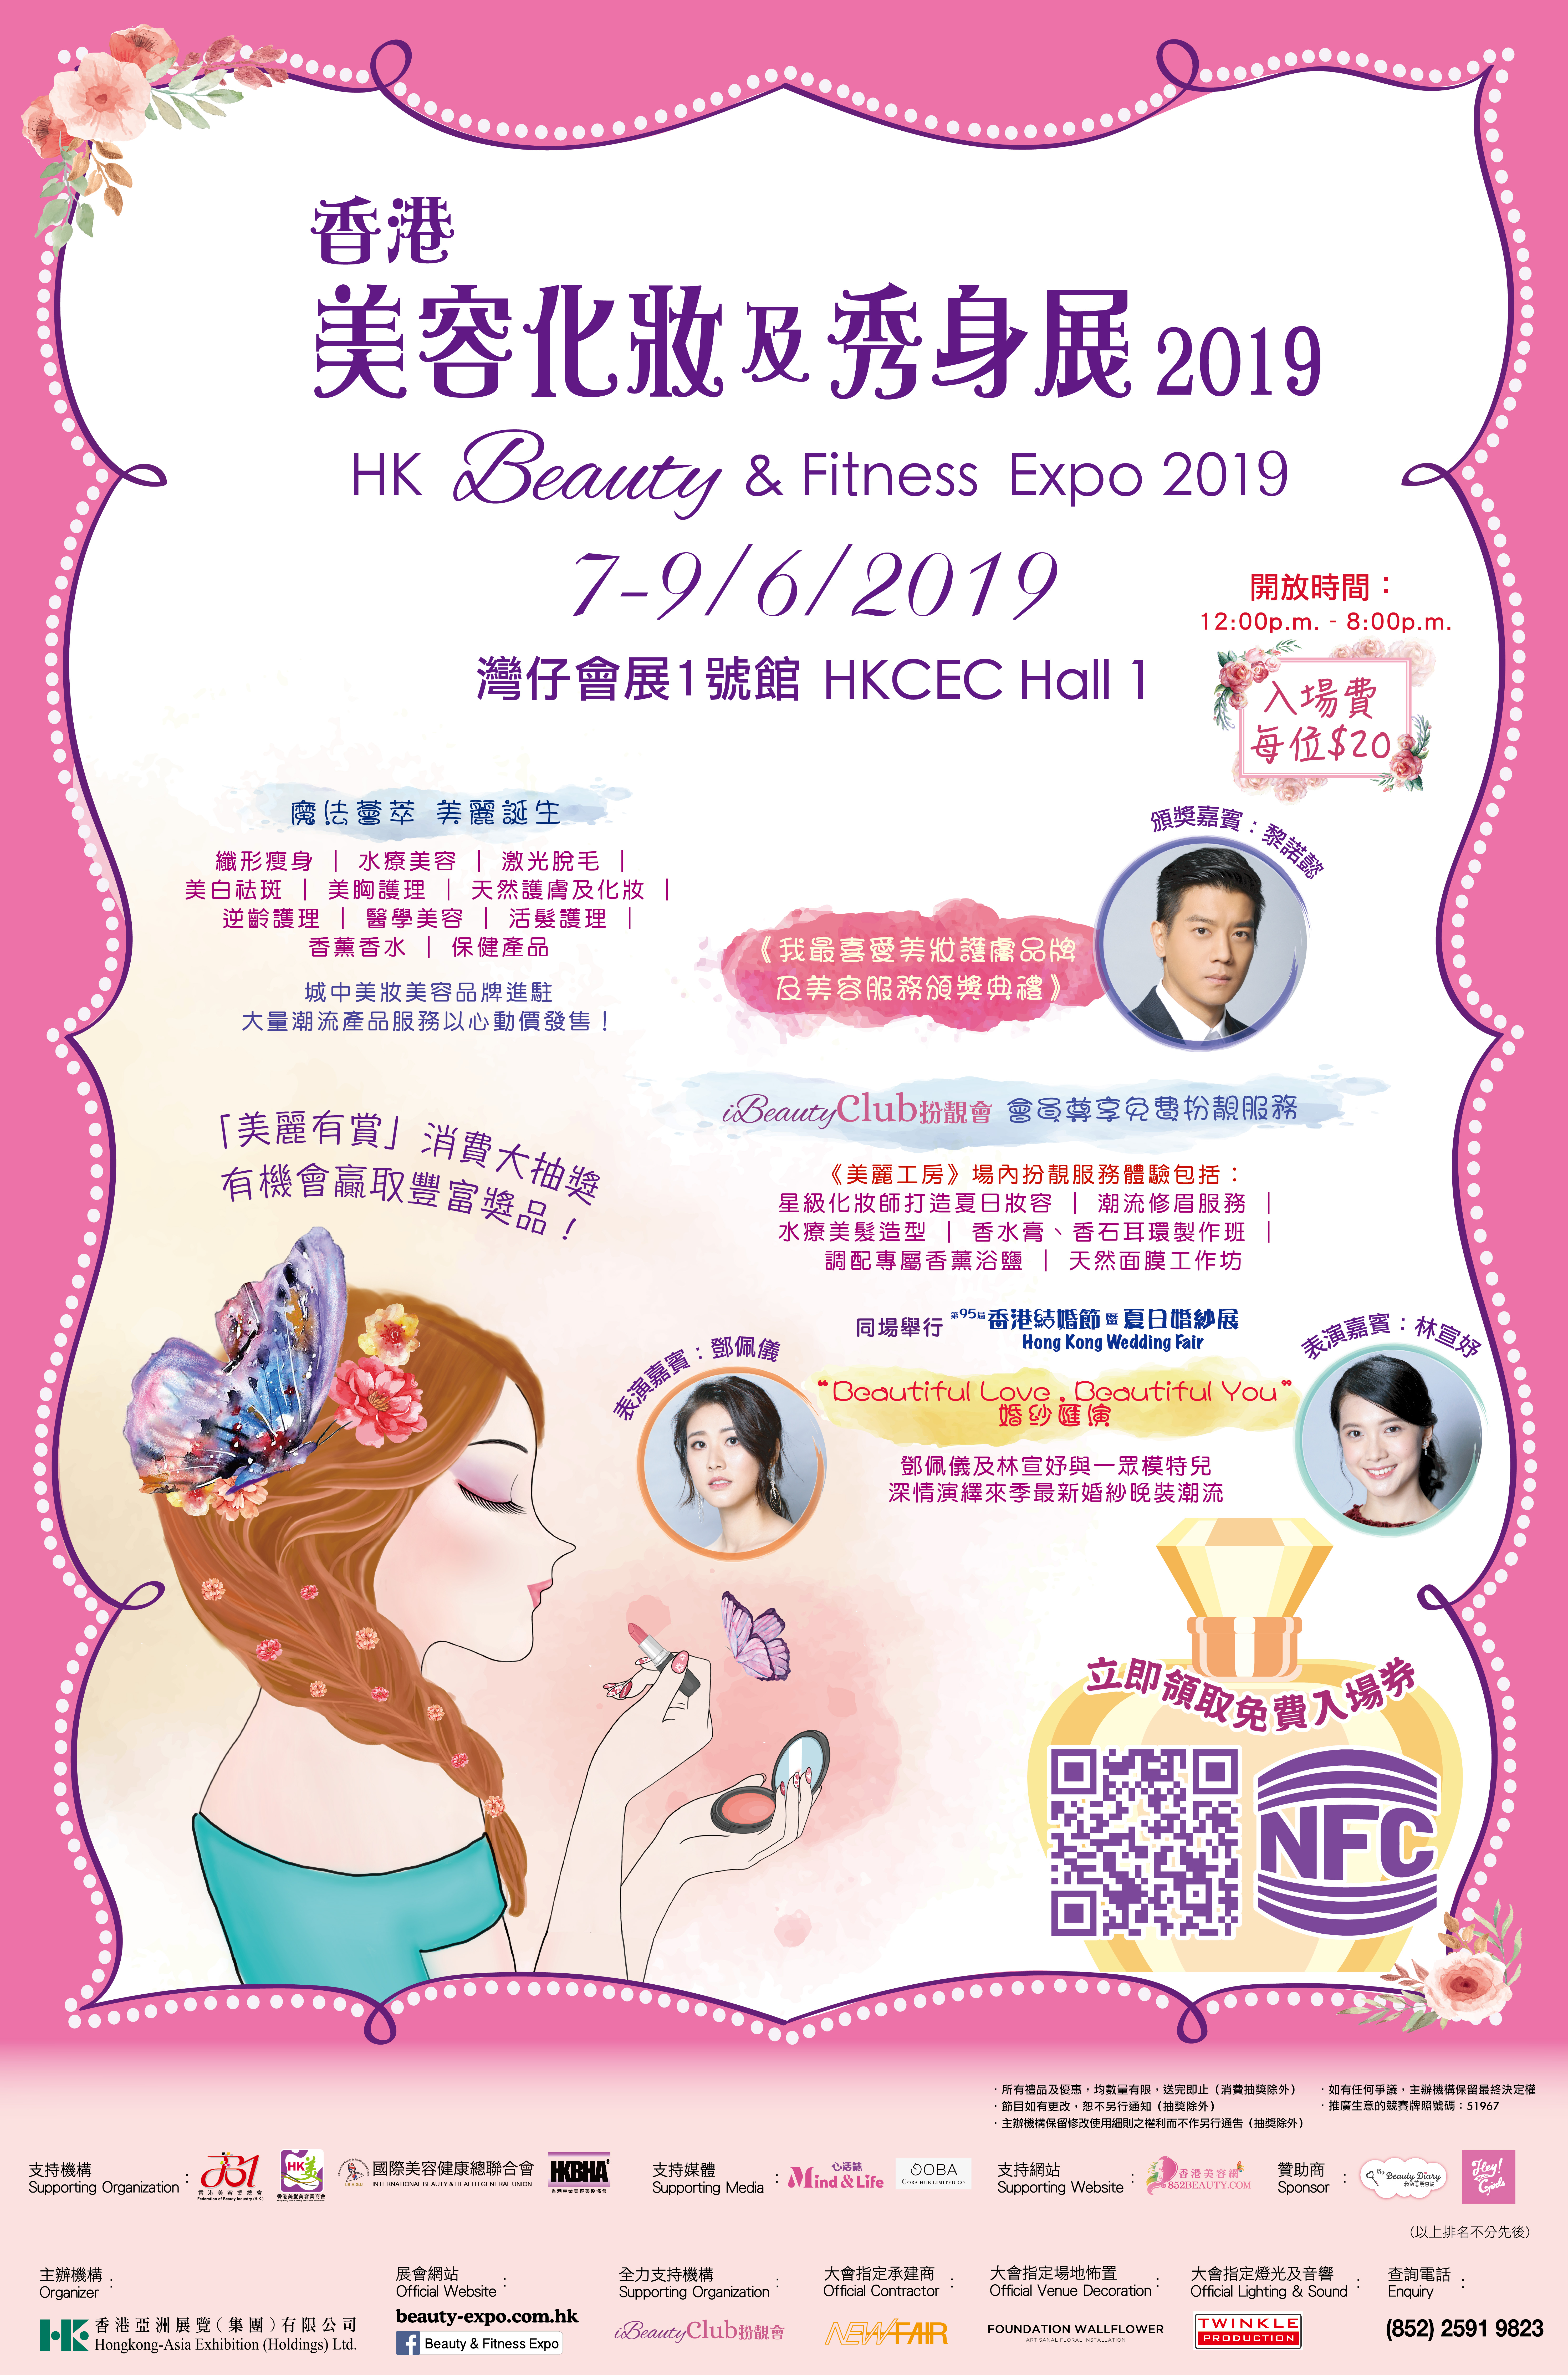 Beauty Salon / Beautician Hot News: 美容化妝及秀身展 2019 x 香港美容網 852beauty